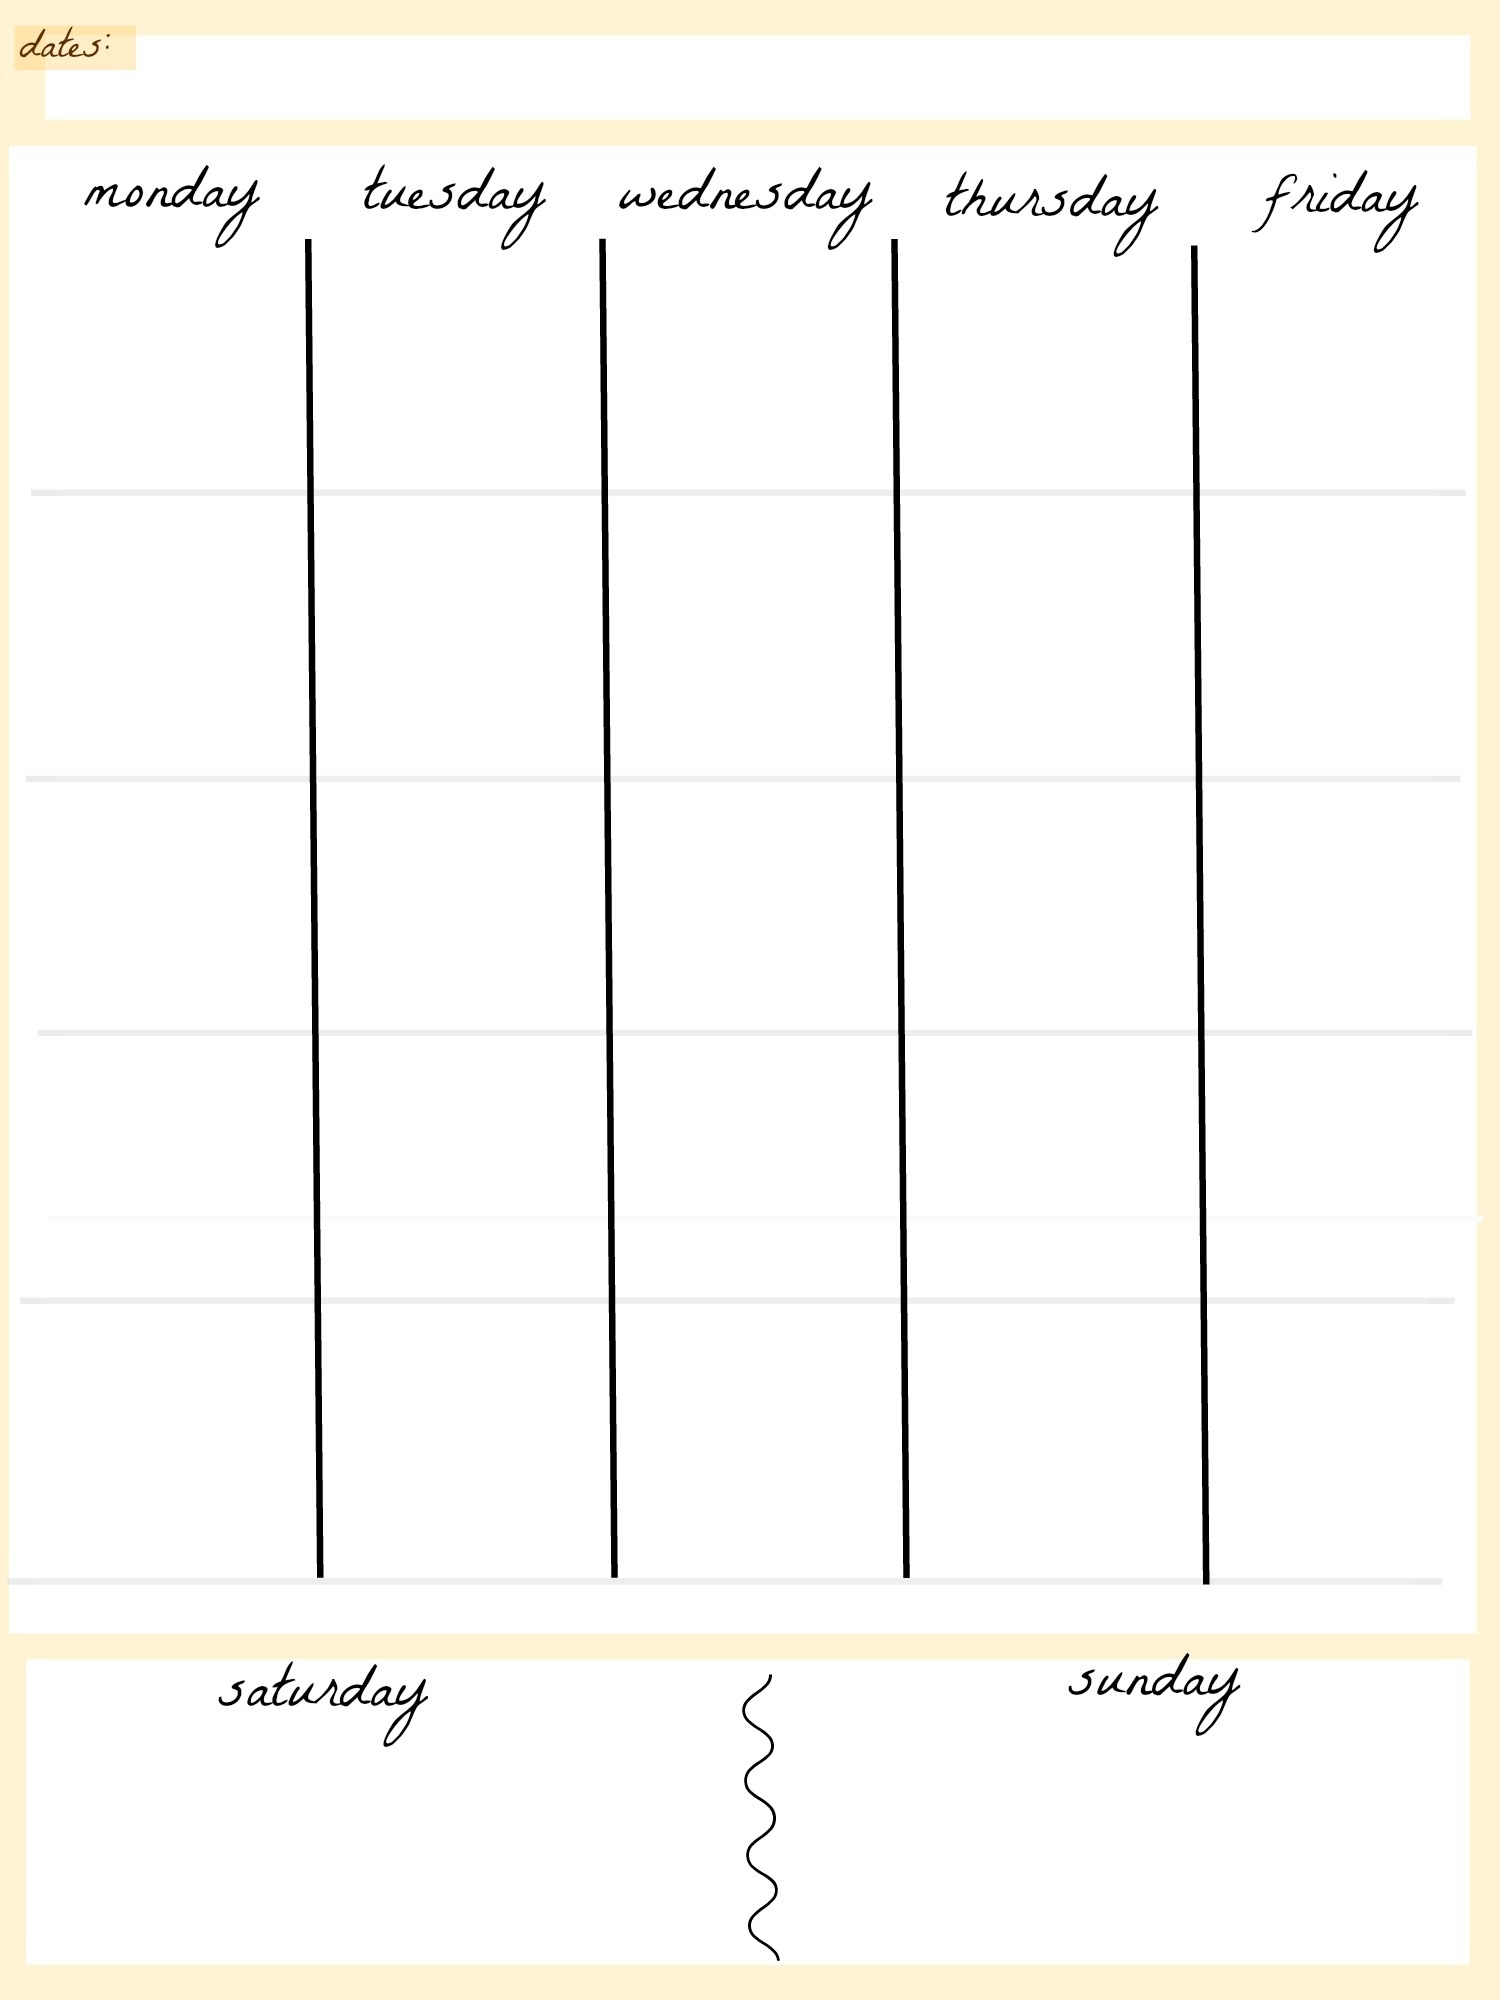 Free Blank Calendar Template 5 Day Week  Template for Printable Calendar Weekdays Only